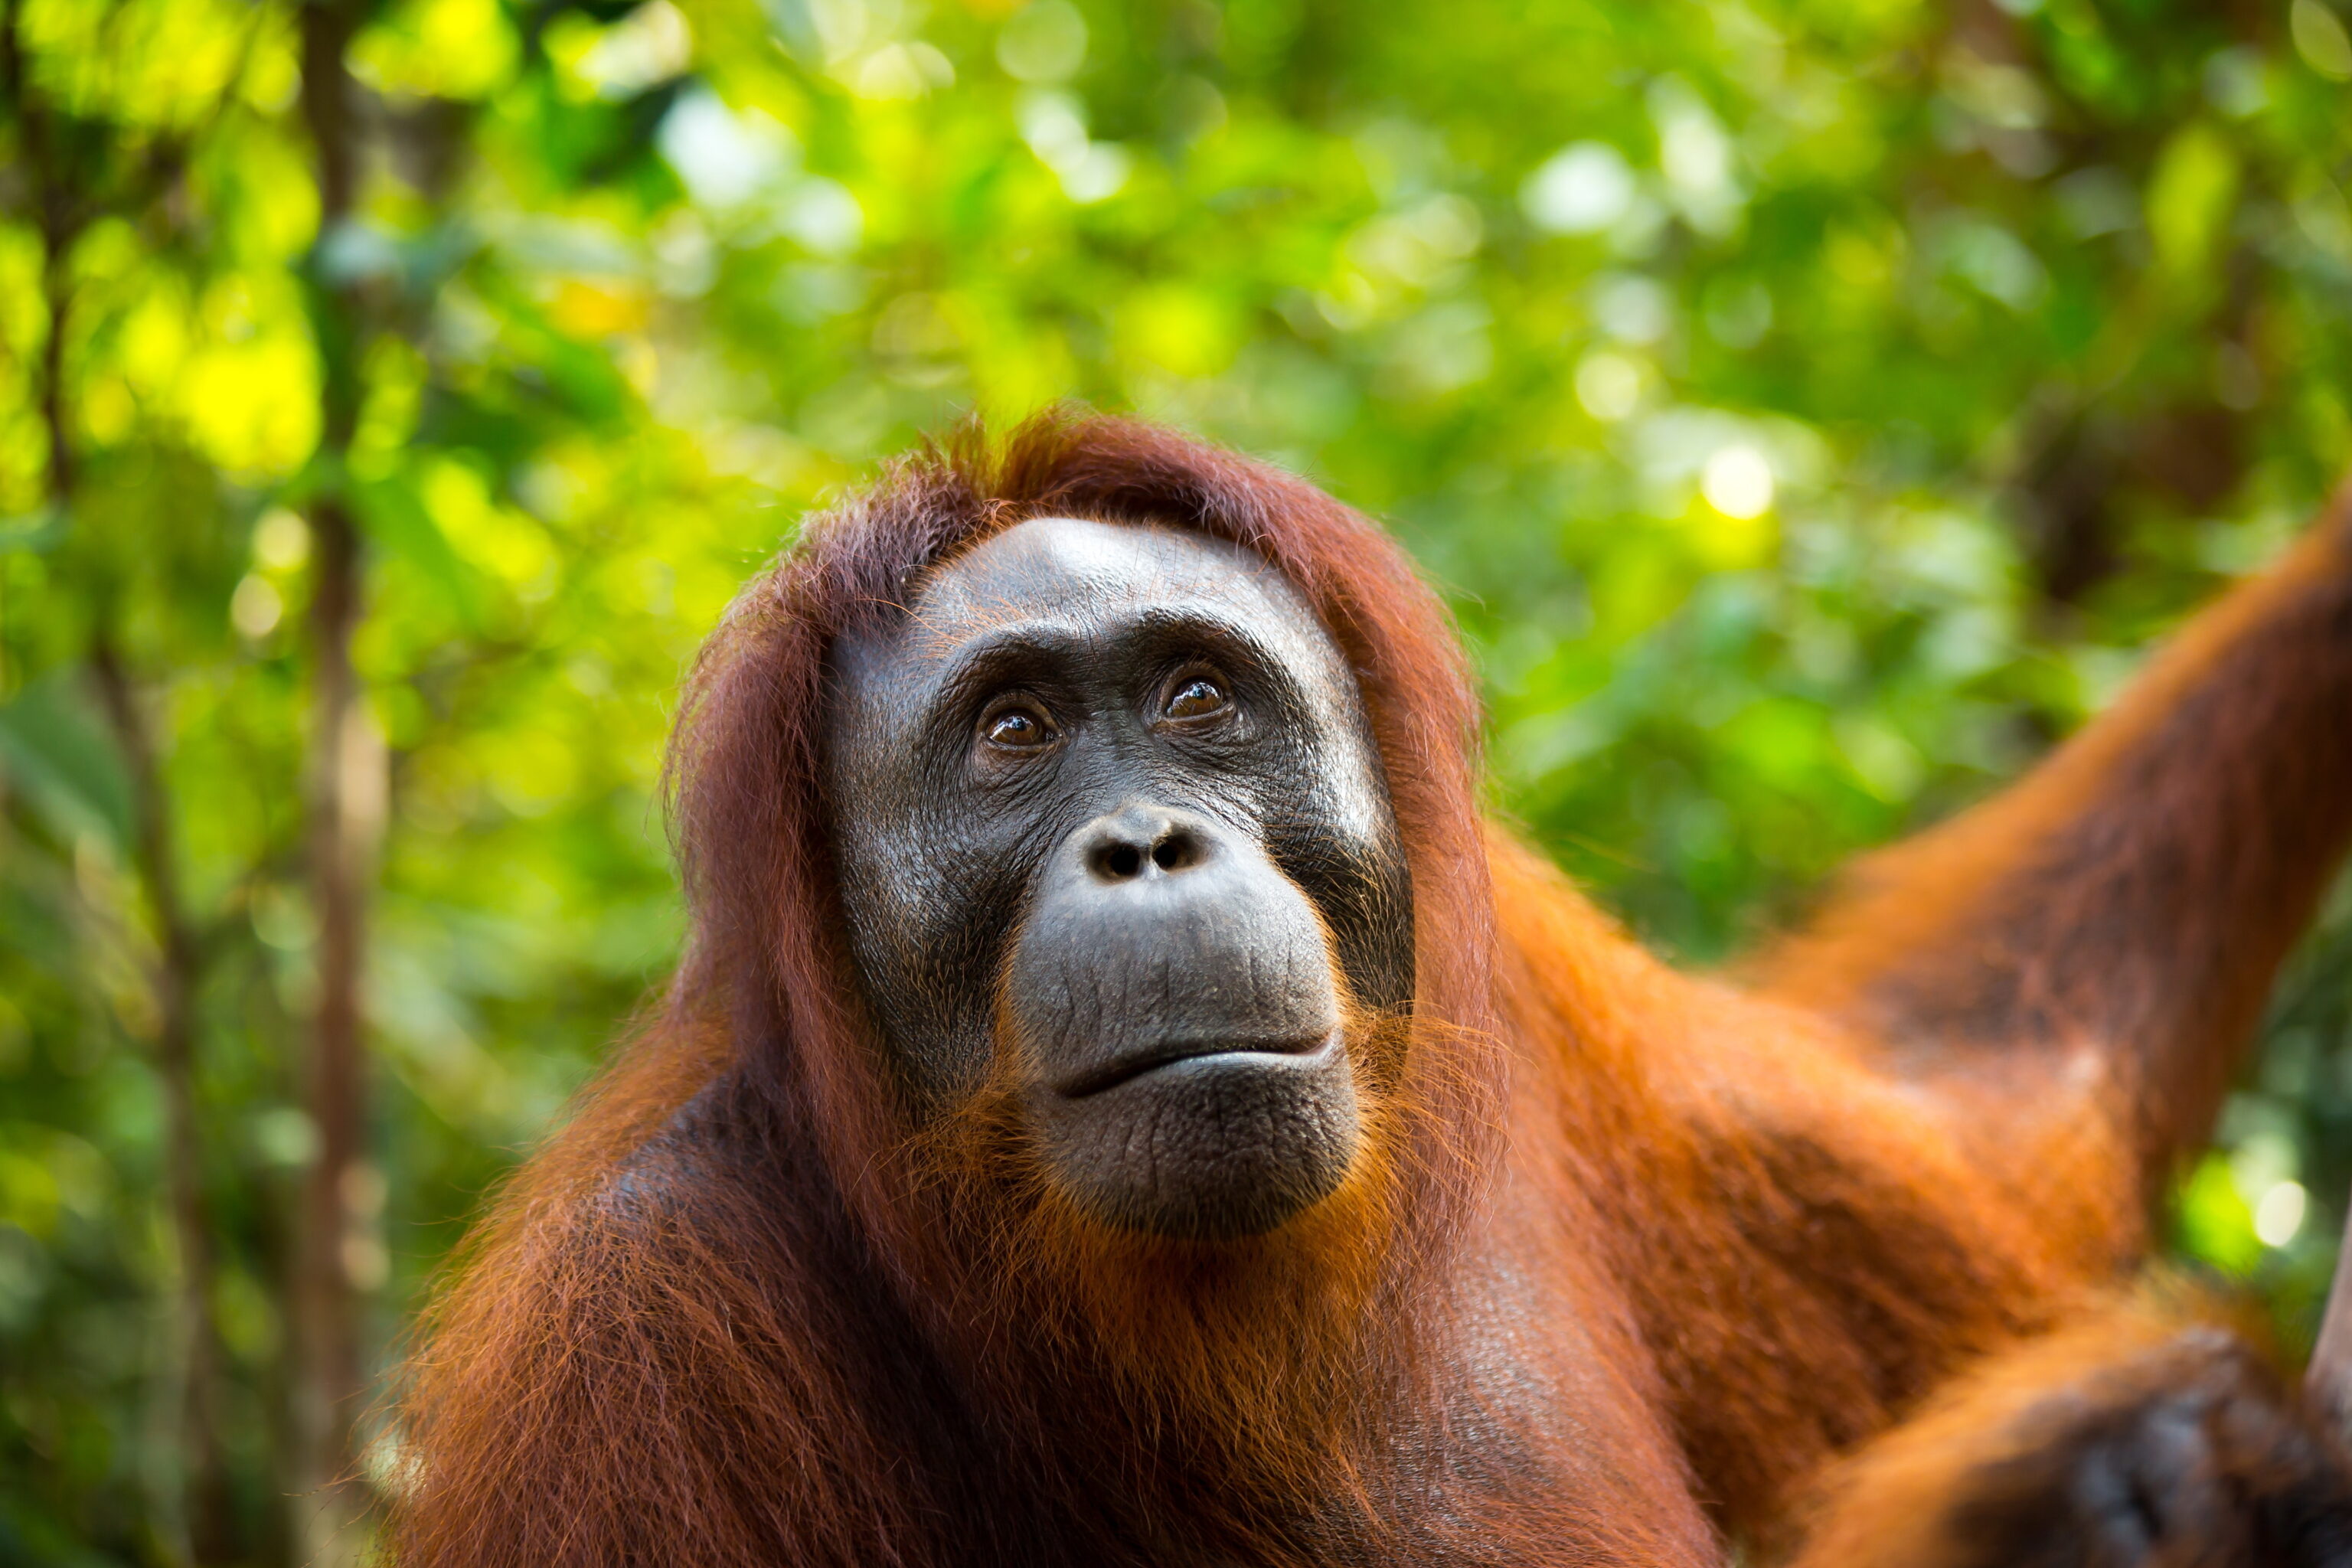 Wild,Orangutan,Looking,Away,In,The,Jungle,Of,Borneo,Indonesia.